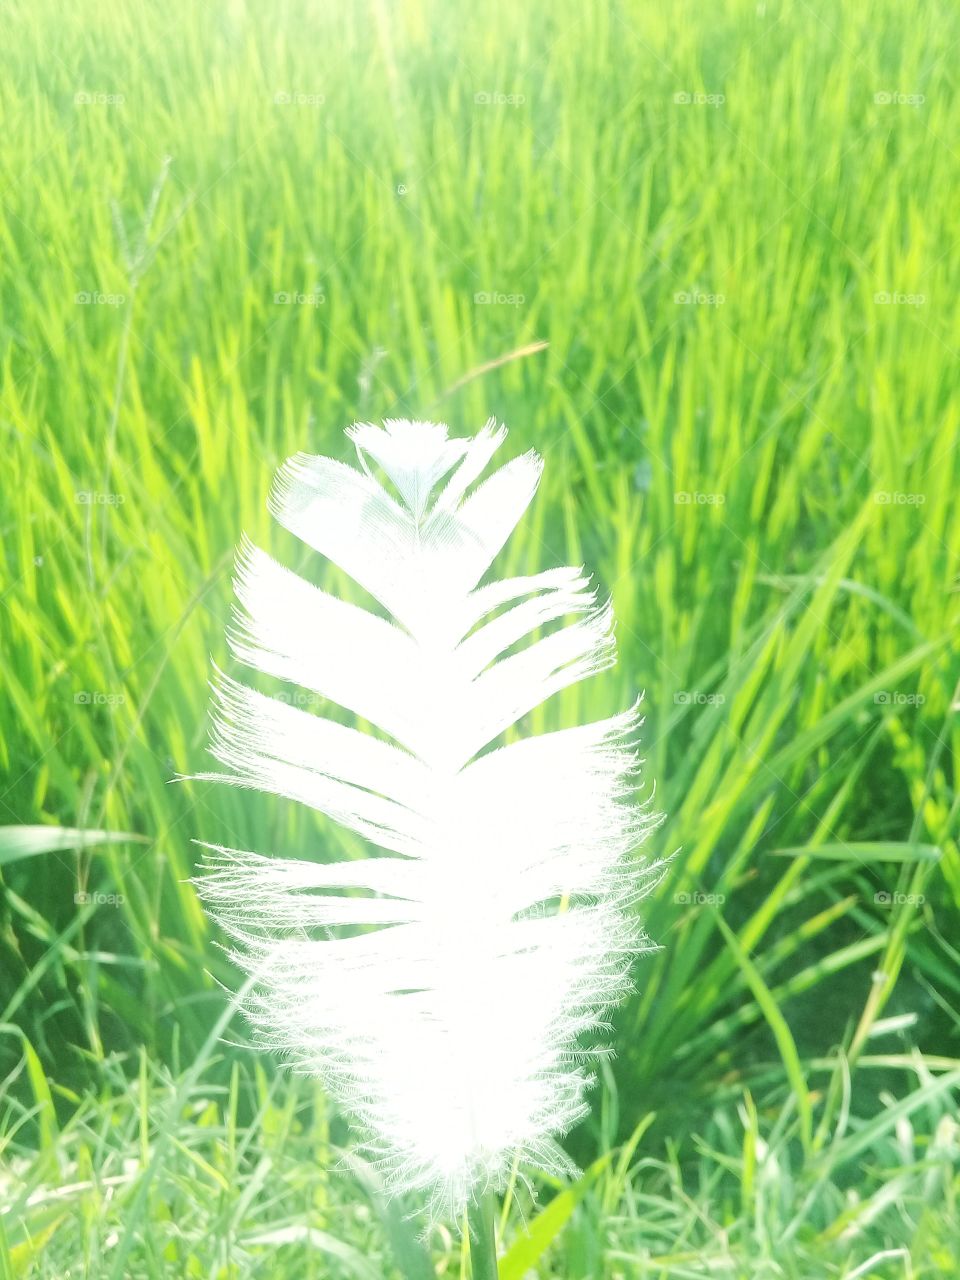 bird feathers on the grass